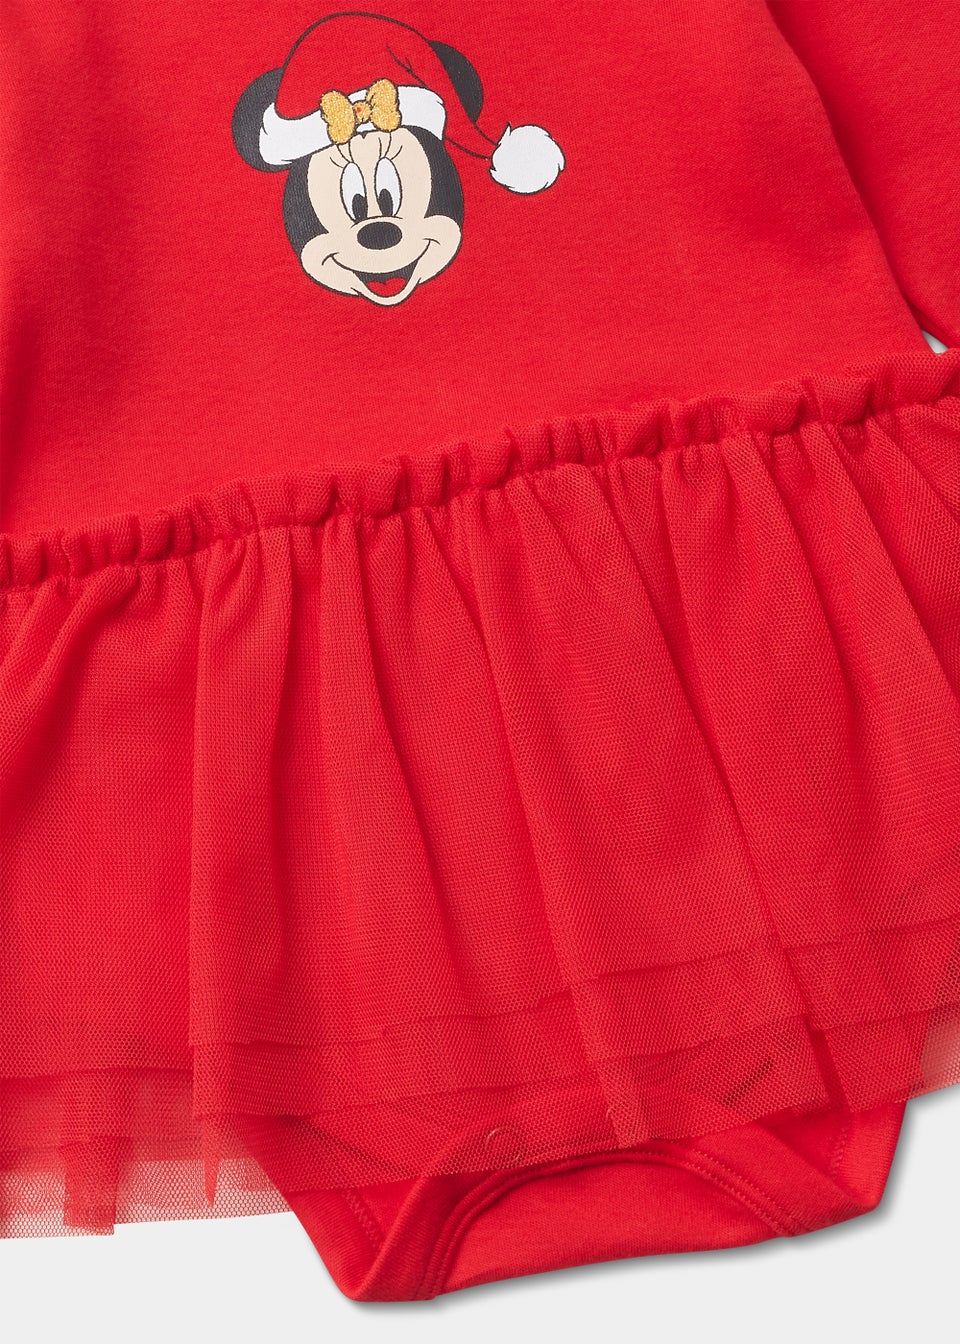 Baby Red Disney Minnie Mouse Christmas Tutu Bodysuit (Newborn-12mths)